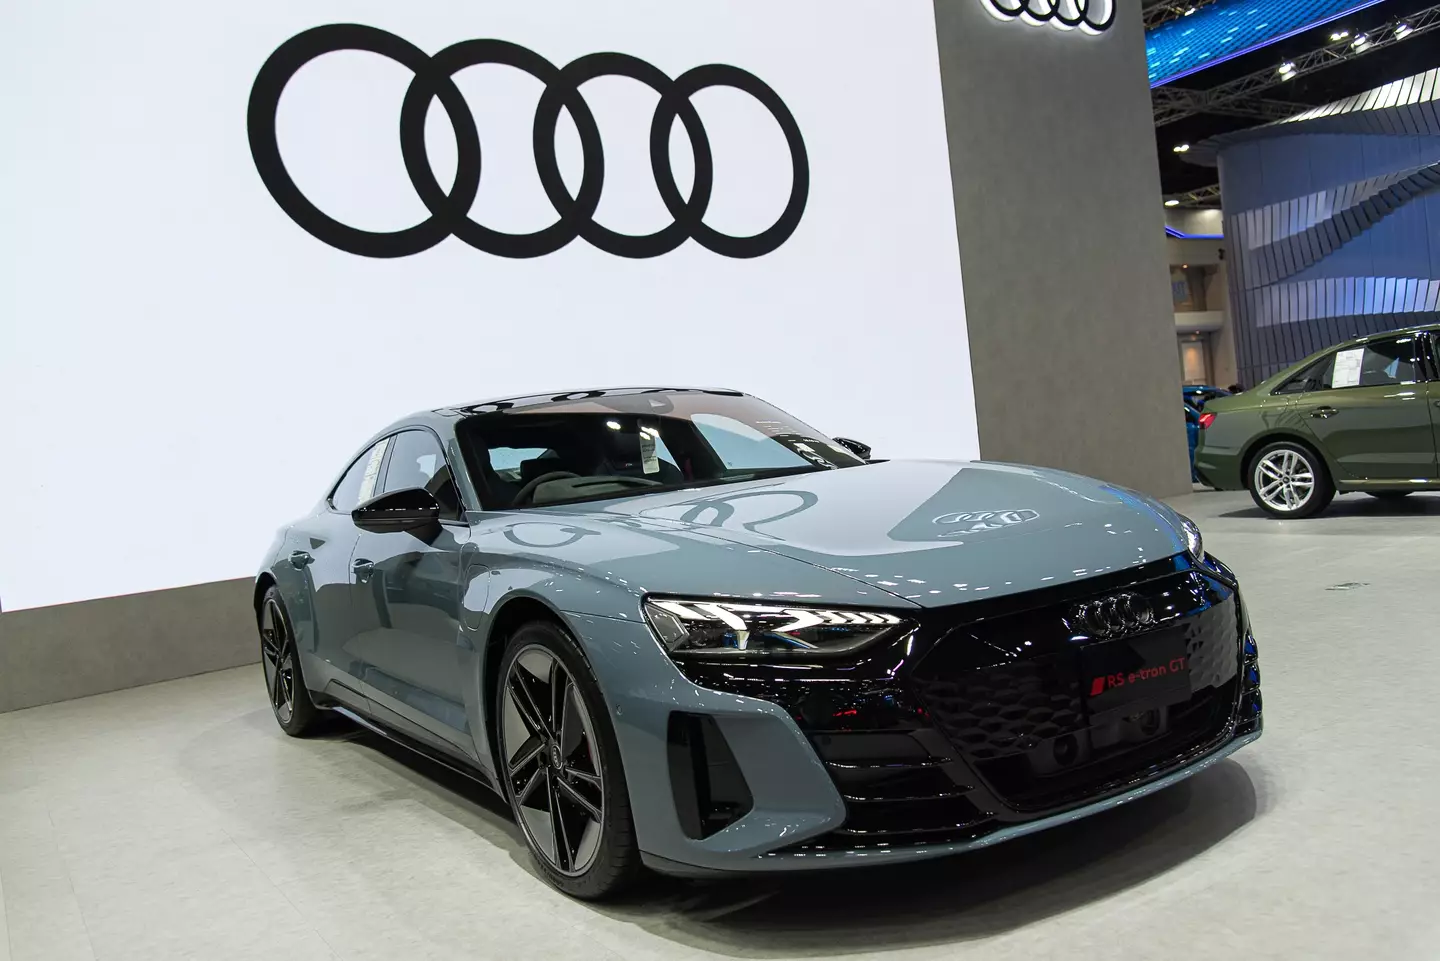 Audi is one car manufacturer that makes EVs (Peerapon Boonyakiat/SOPA Images/LightRocket via Getty Images)